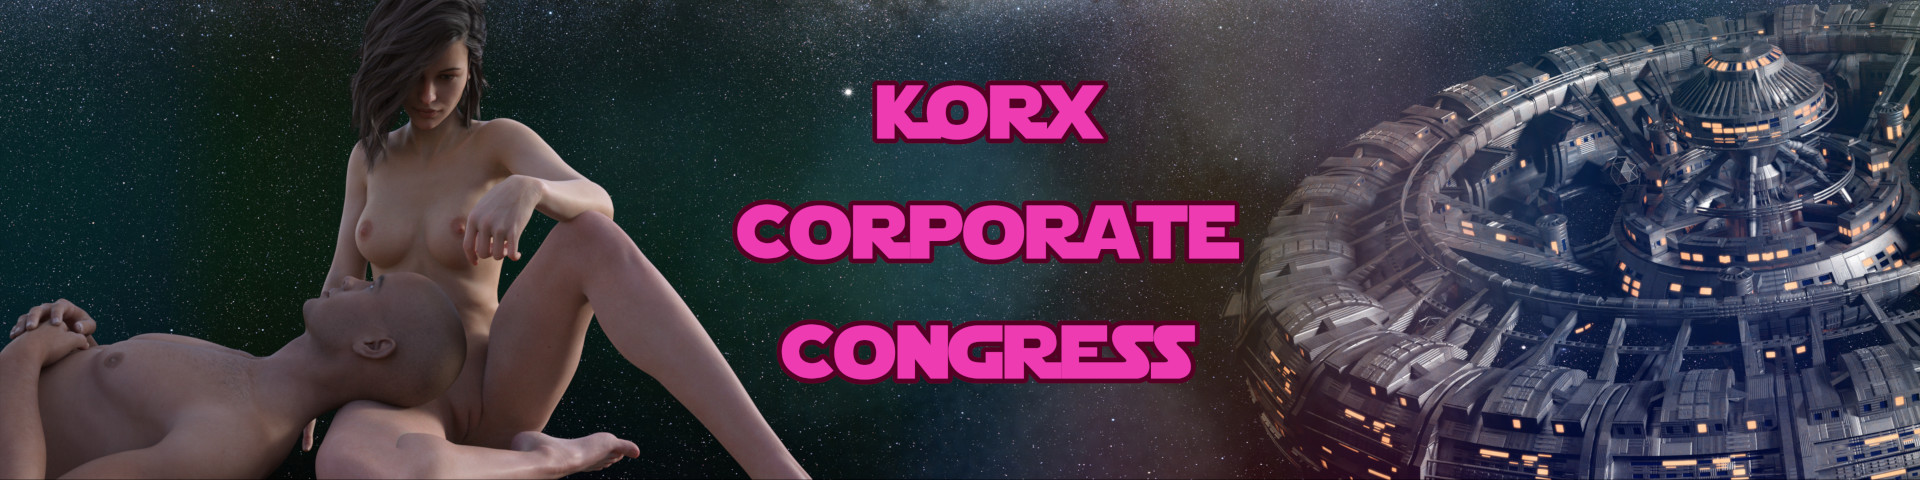 Korx Corporate Congress